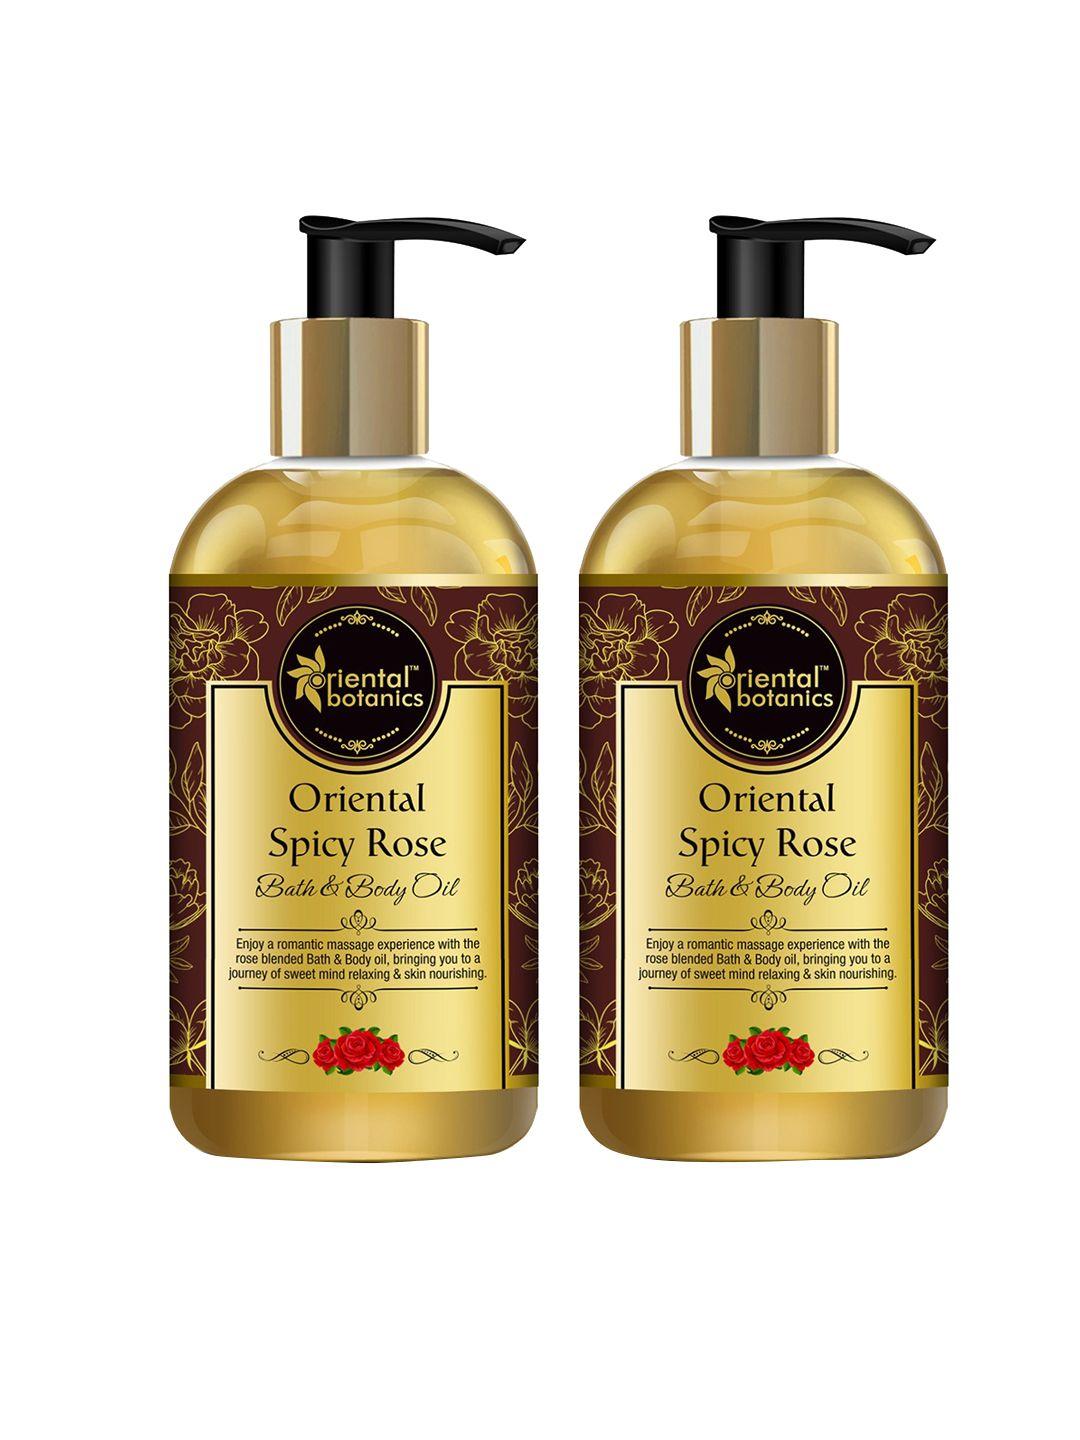 oriental botanics set of 2 oriental spicy rose bath & body oils 200 ml each